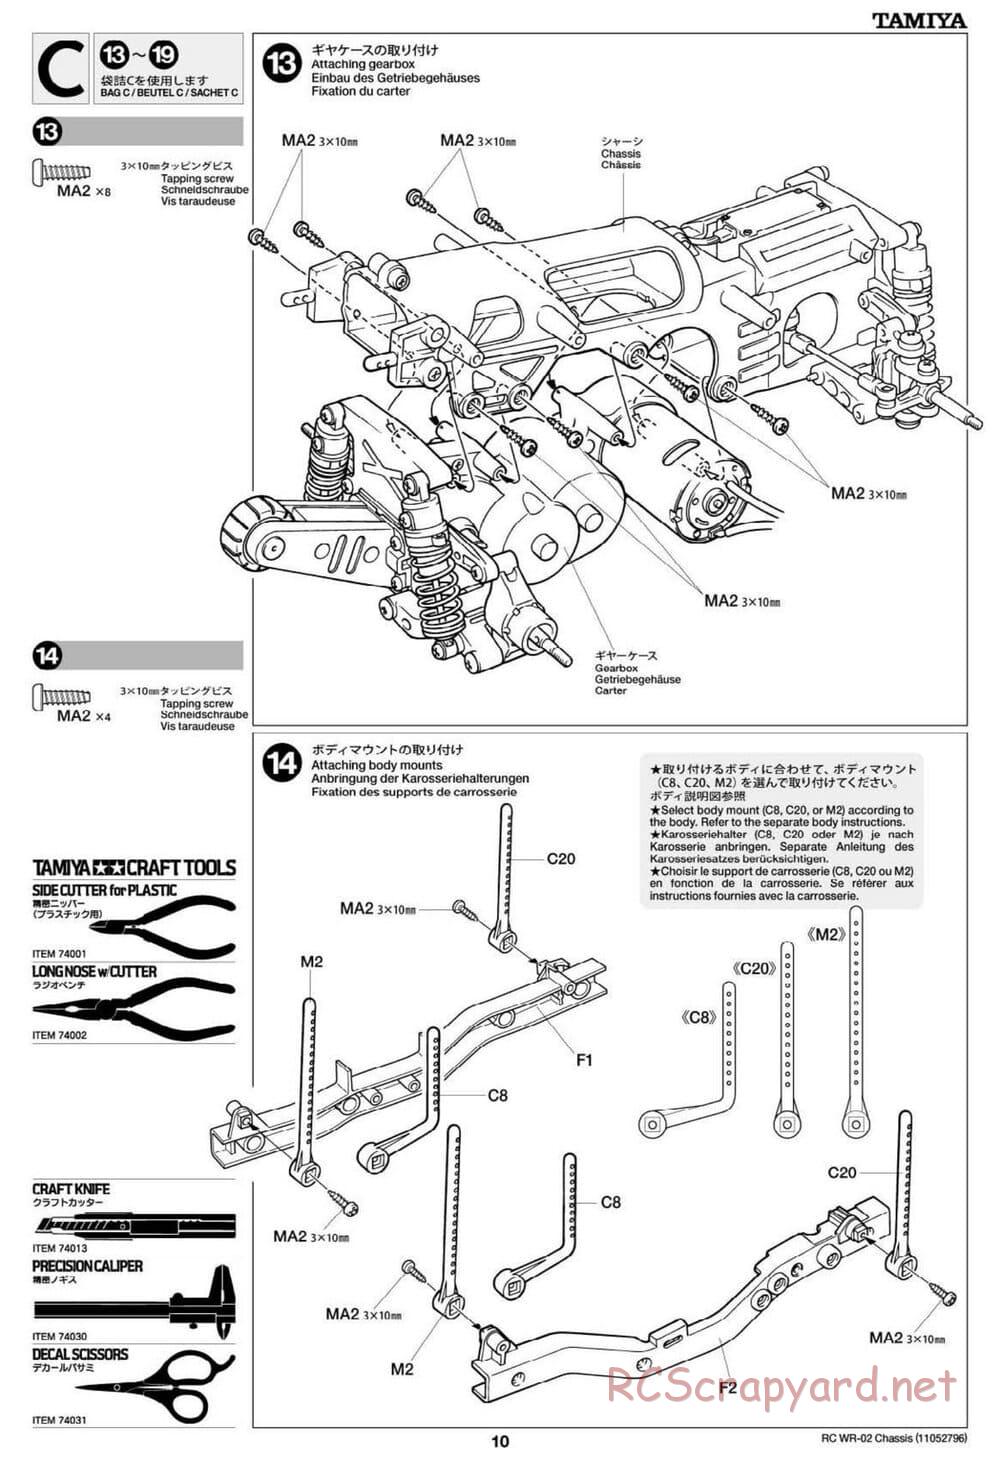 Tamiya - WR-02 Chassis - Manual - Page 10